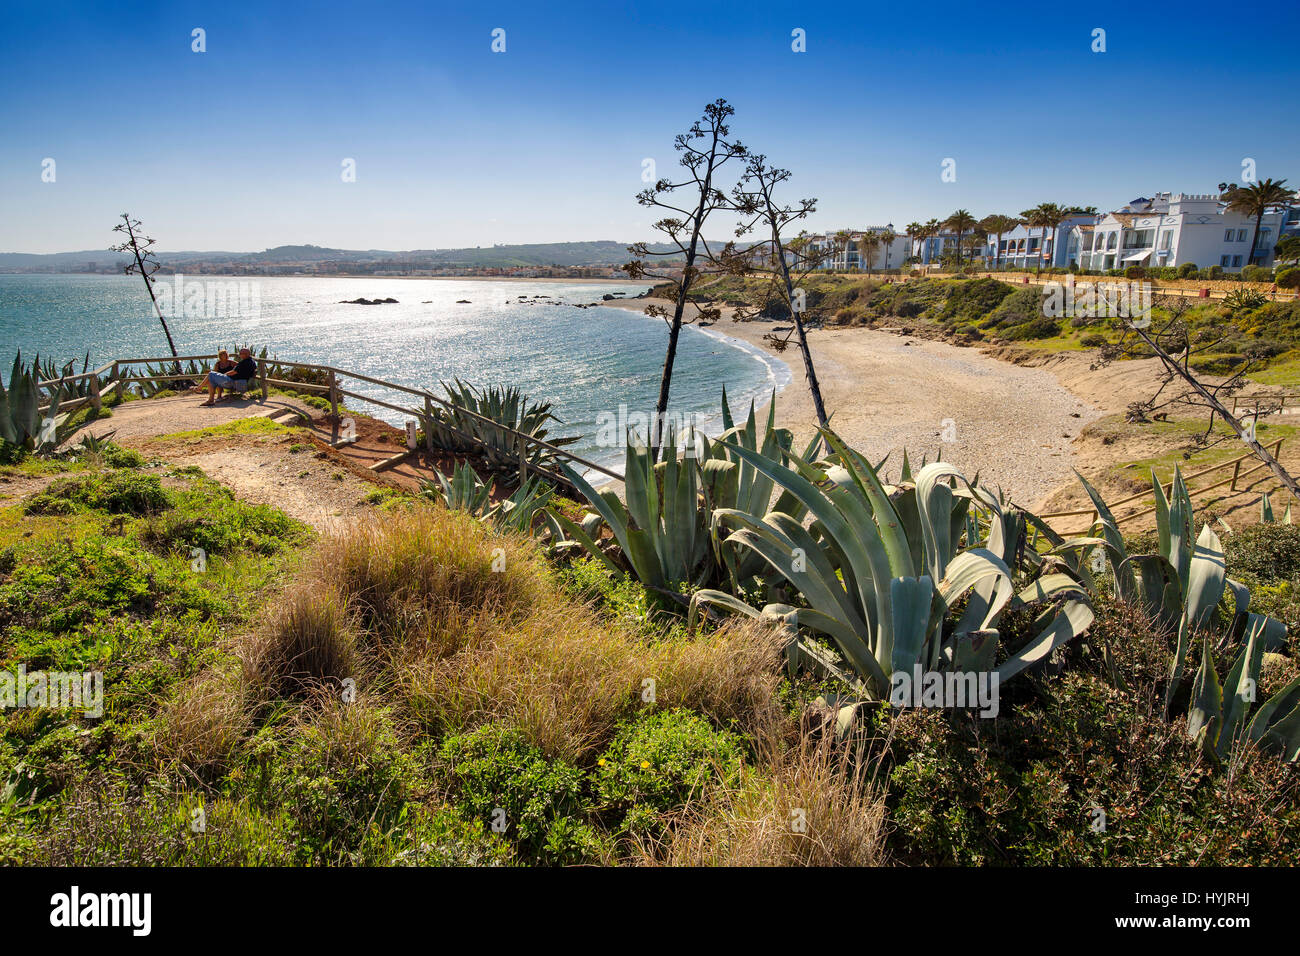 Beach. Playa Ancha, Casares. Malaga province Costa del Sol. Andalusia Southern Spain, Europe Stock Photo